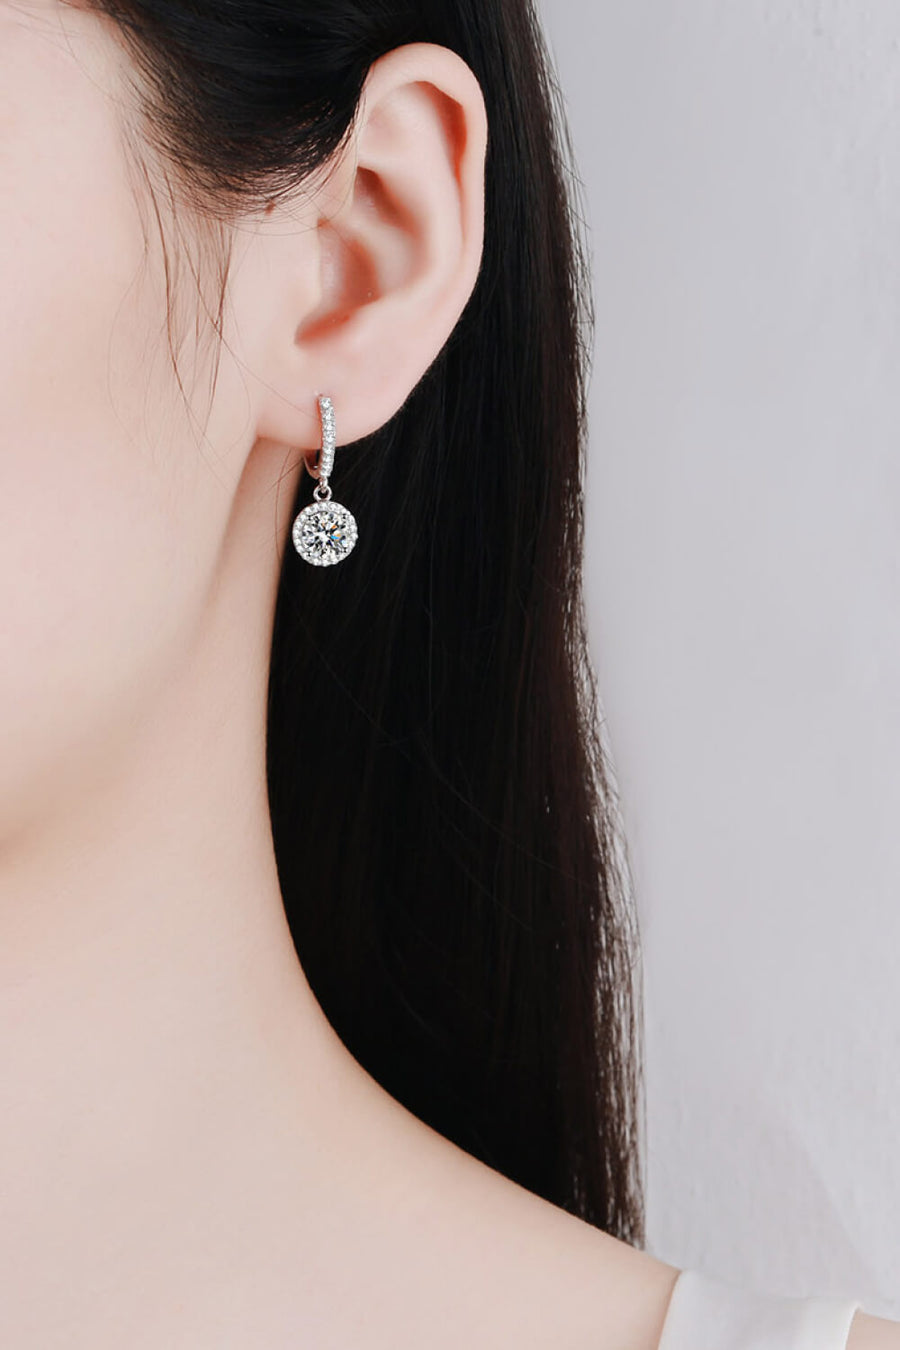 1# BEST Diamond Earrings Jewelry Gifts for Women | #1 Best Most Top Trendy Trending 2 Carat Round Diamond Drop Earrings Gift for Women, Ladies, Mother | MASON New York